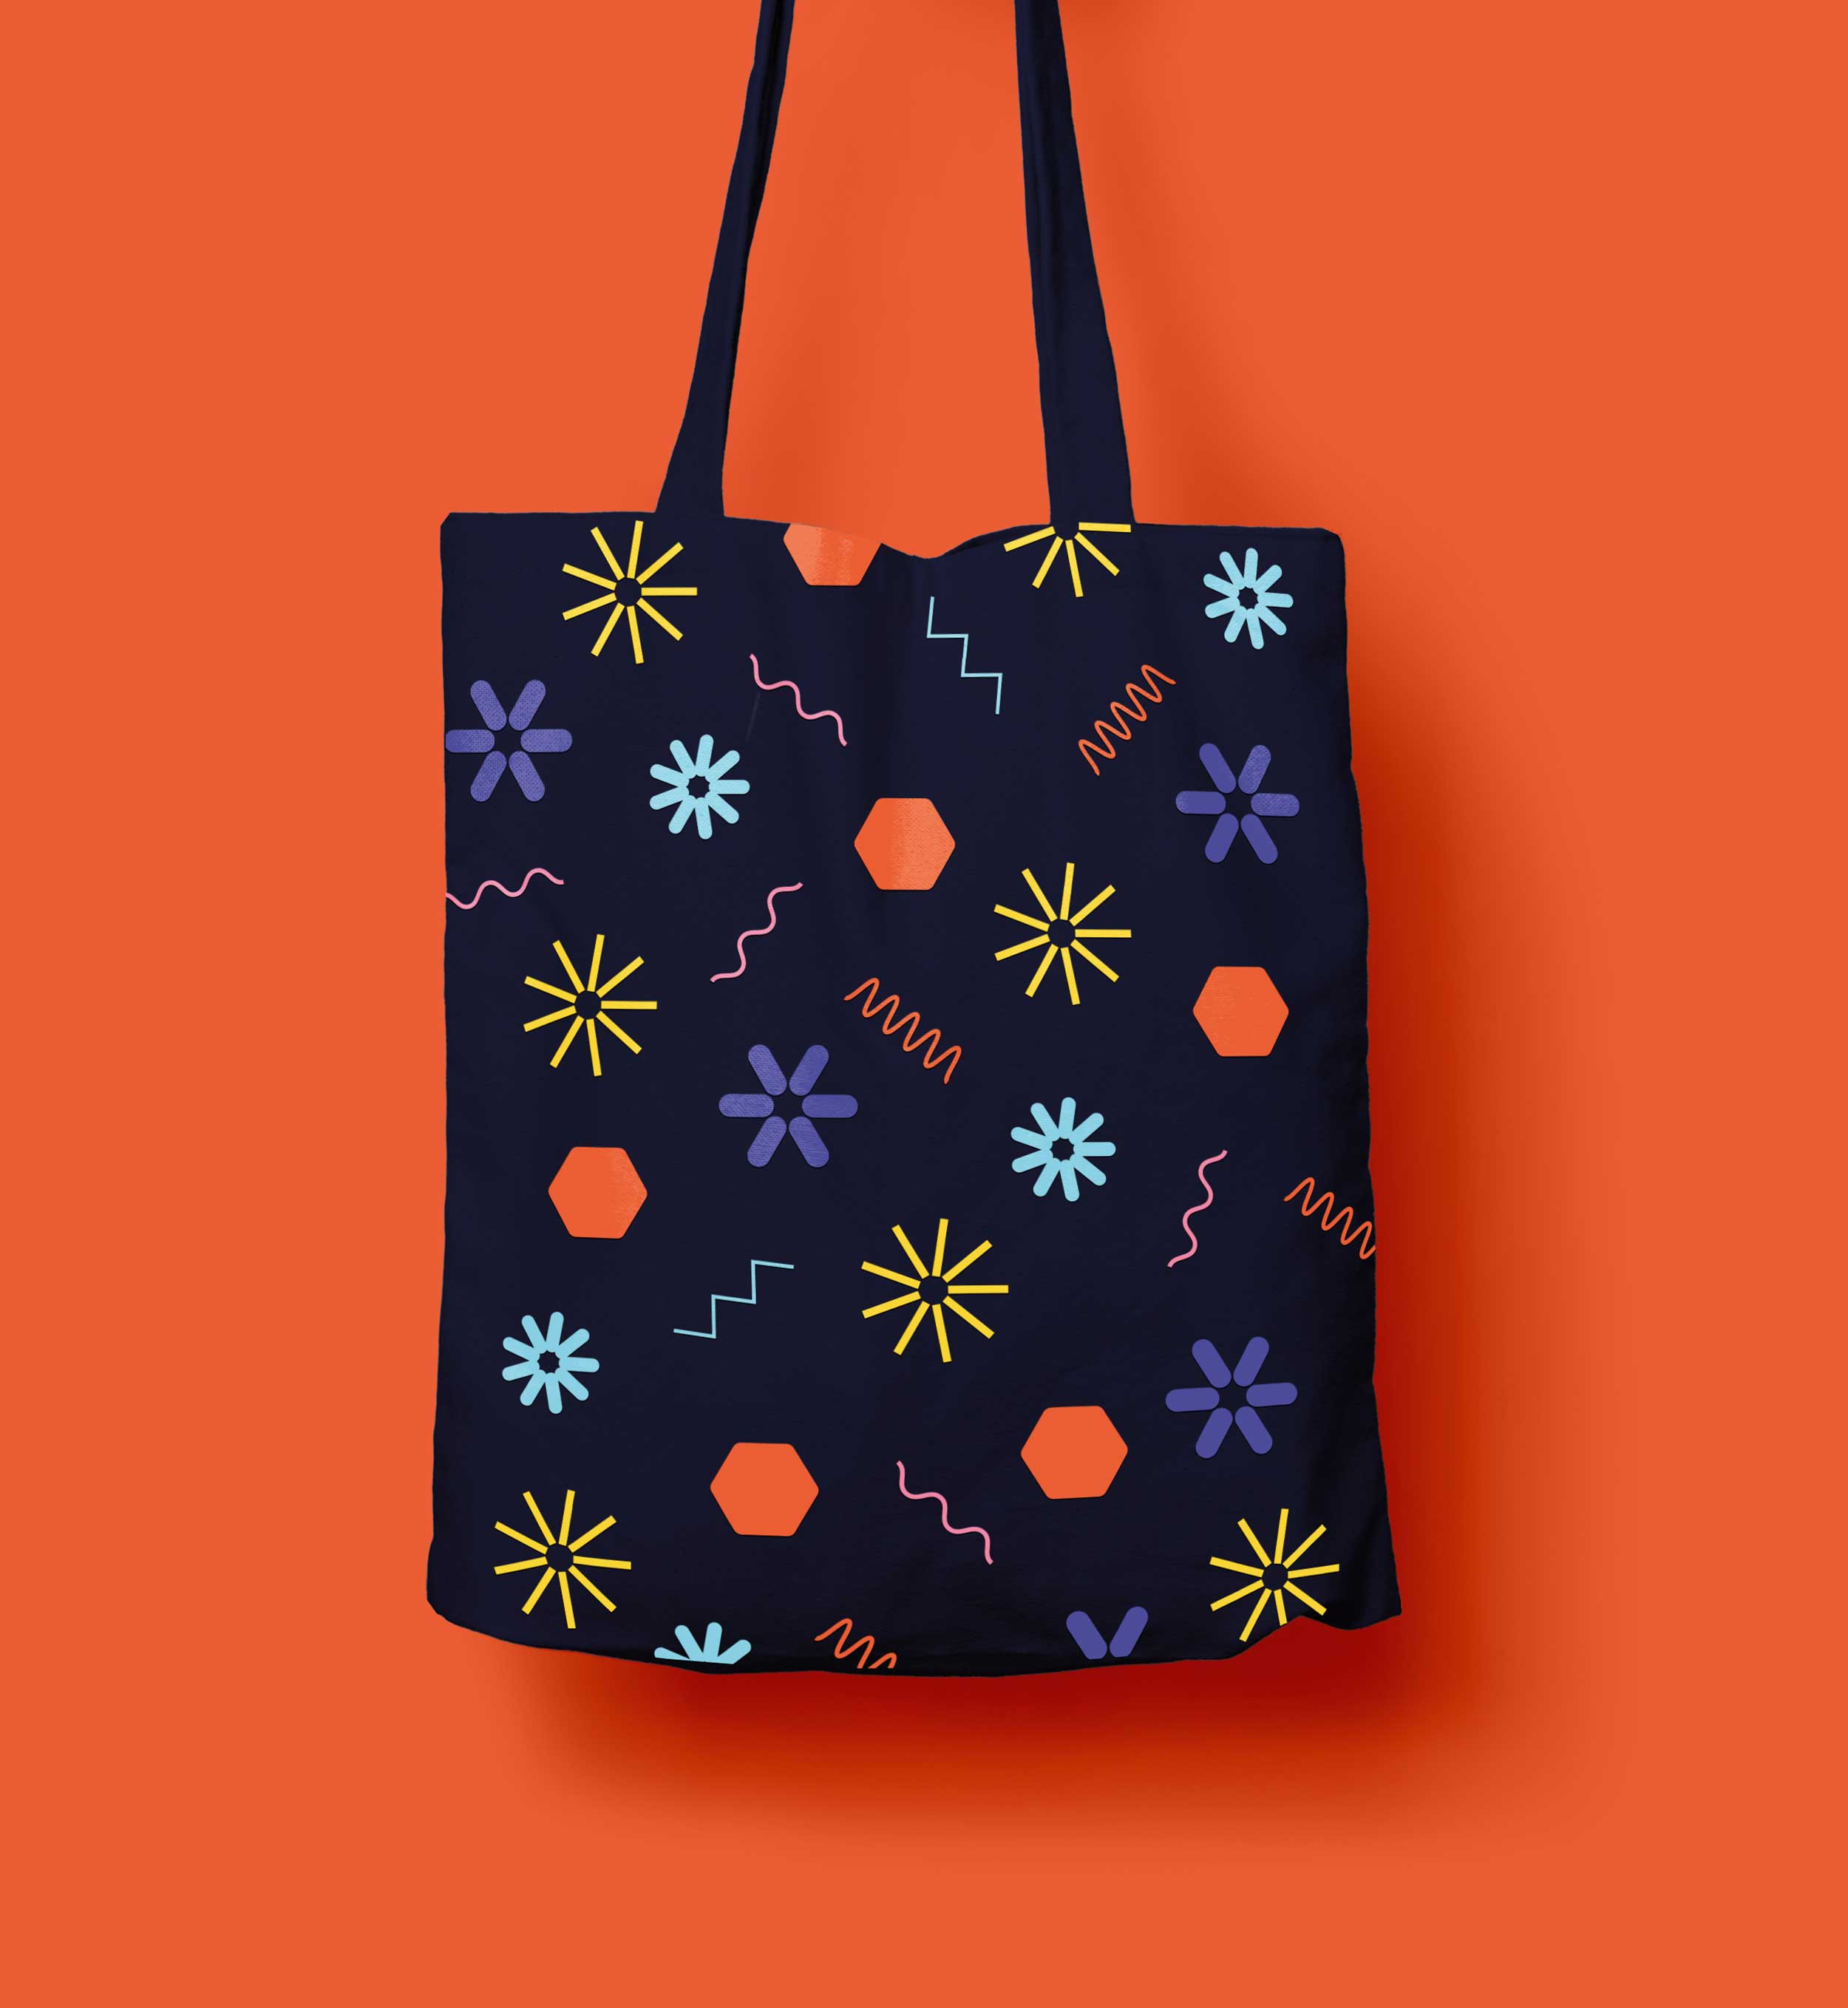 patterned tote bag